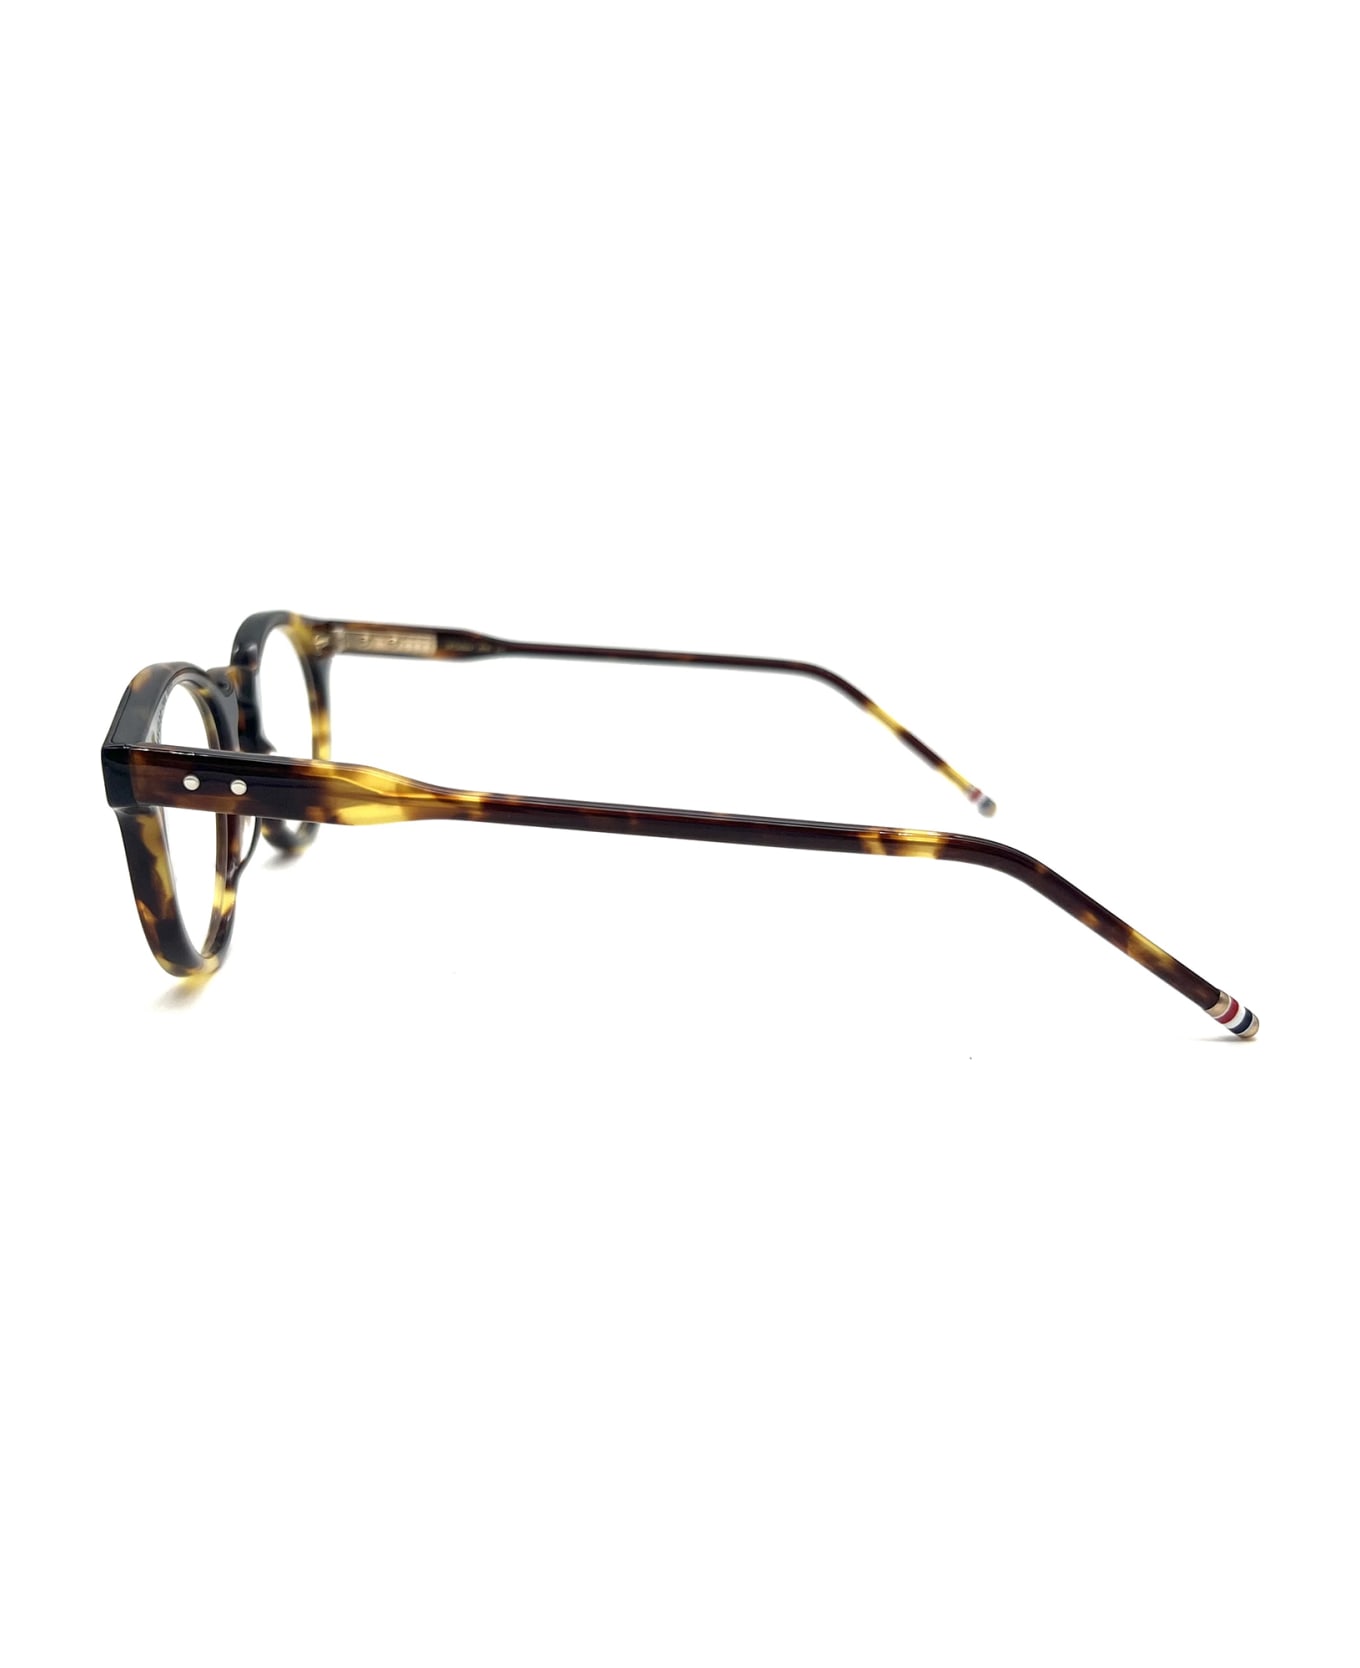 Thom Browne Ueo404a-g0002-215-45 Glasses - 215 MED アイウェア